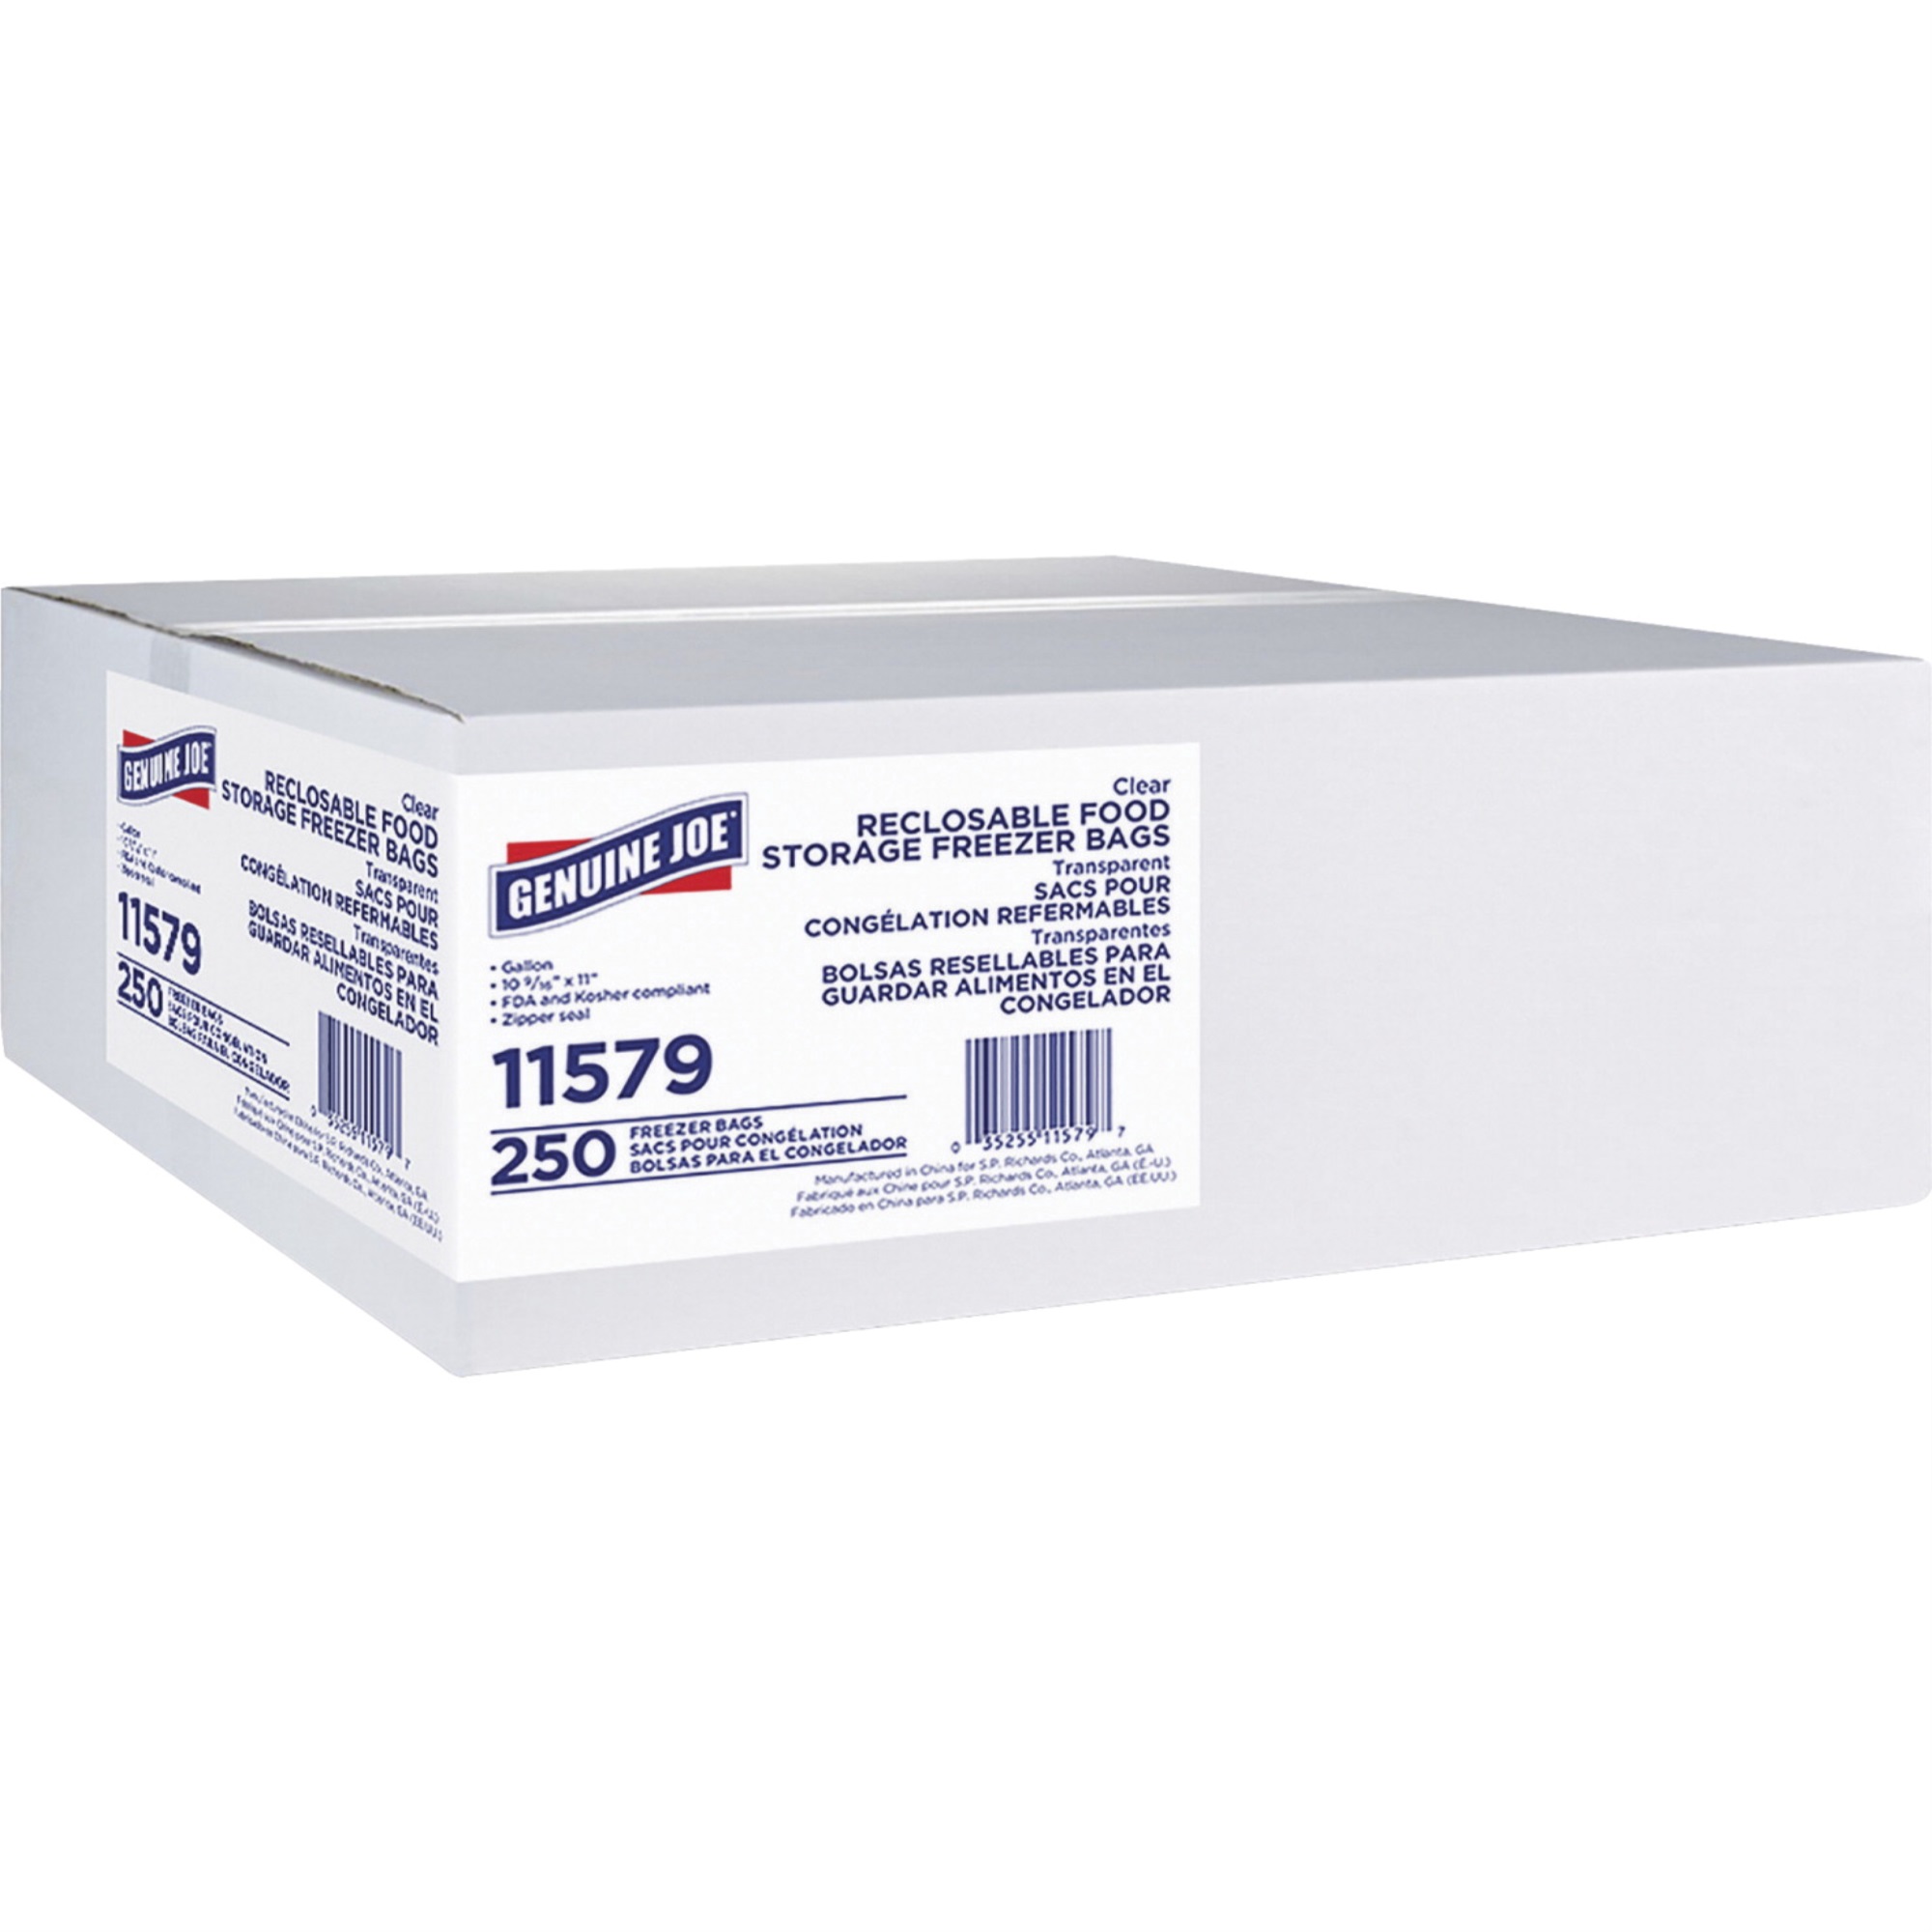 Genuine Joe Freezer Storage Bags - 1 gal - 2.70 mil (69 Micron) Thickness - Clear - 250/Box - Beef,